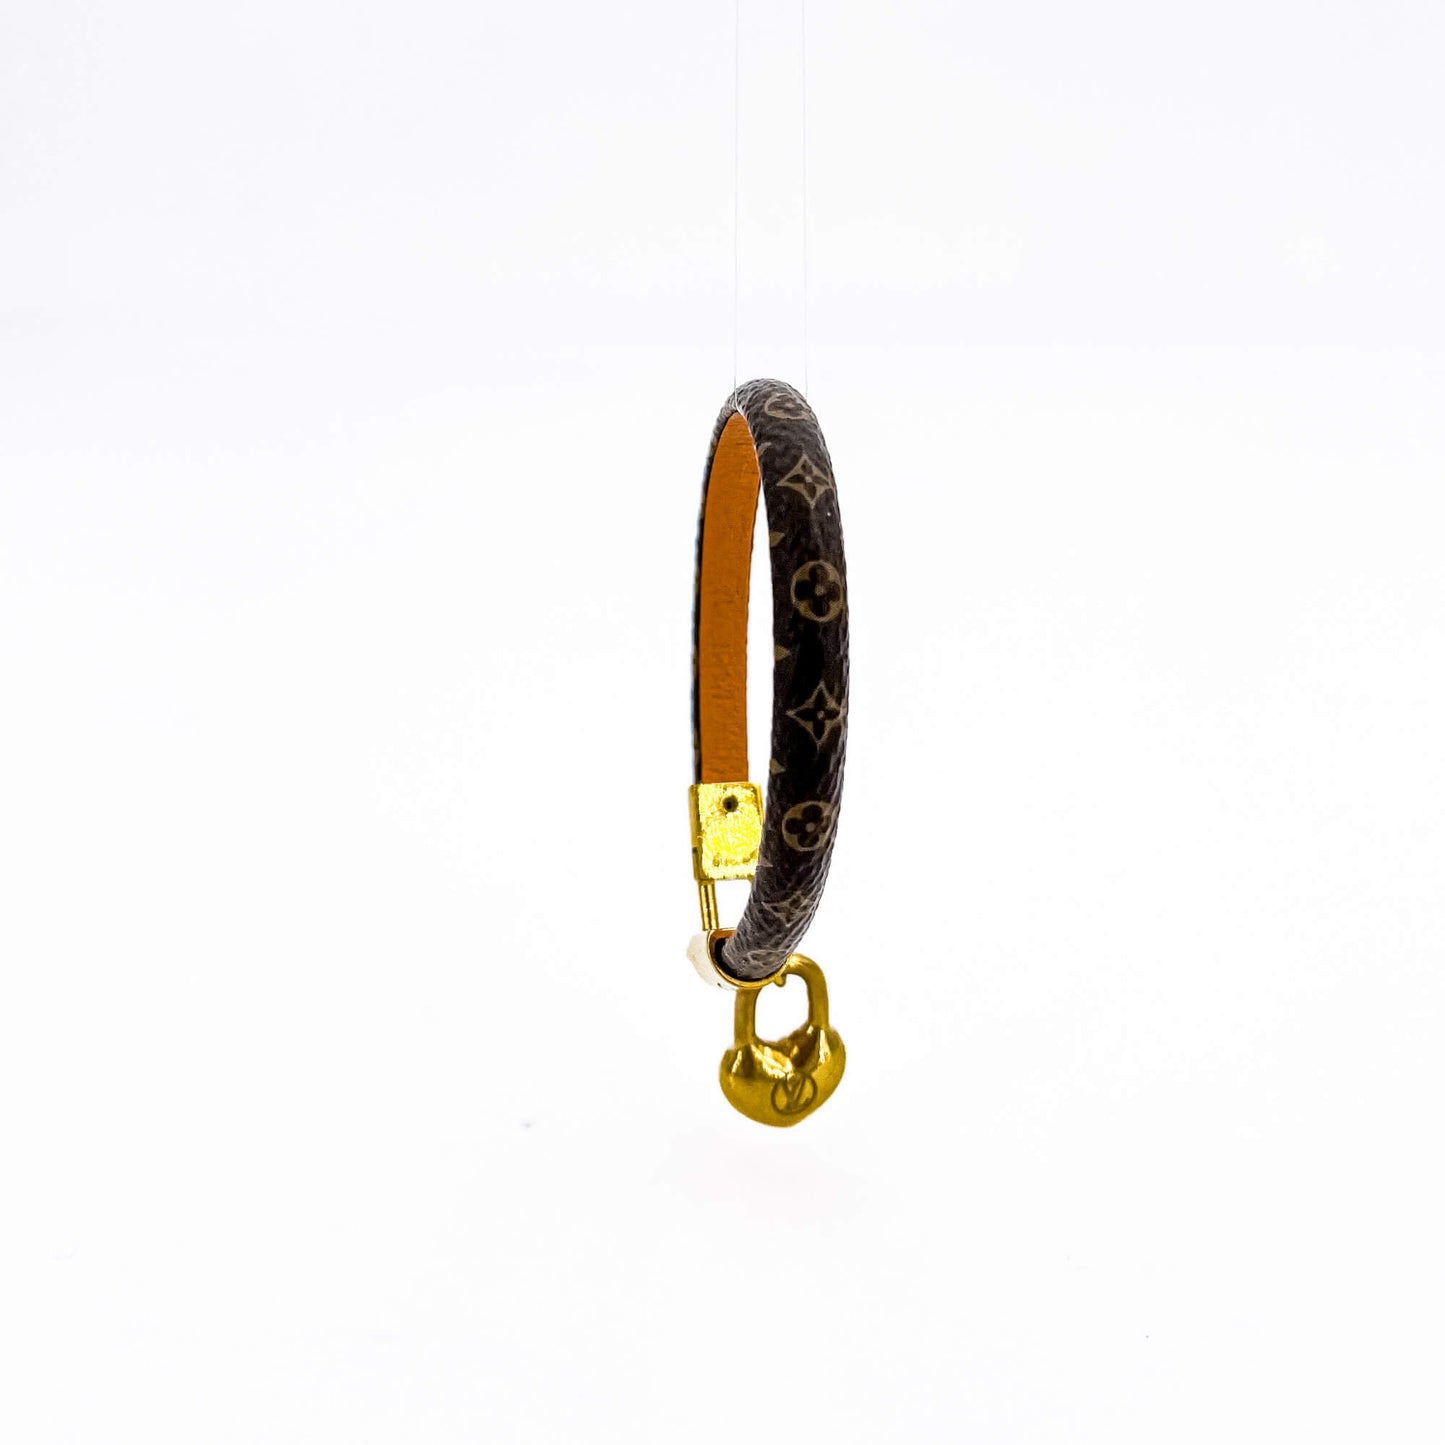 Louis Vuitton Monogram Canvas Crazy In Lock Charm Bracelet (SHF